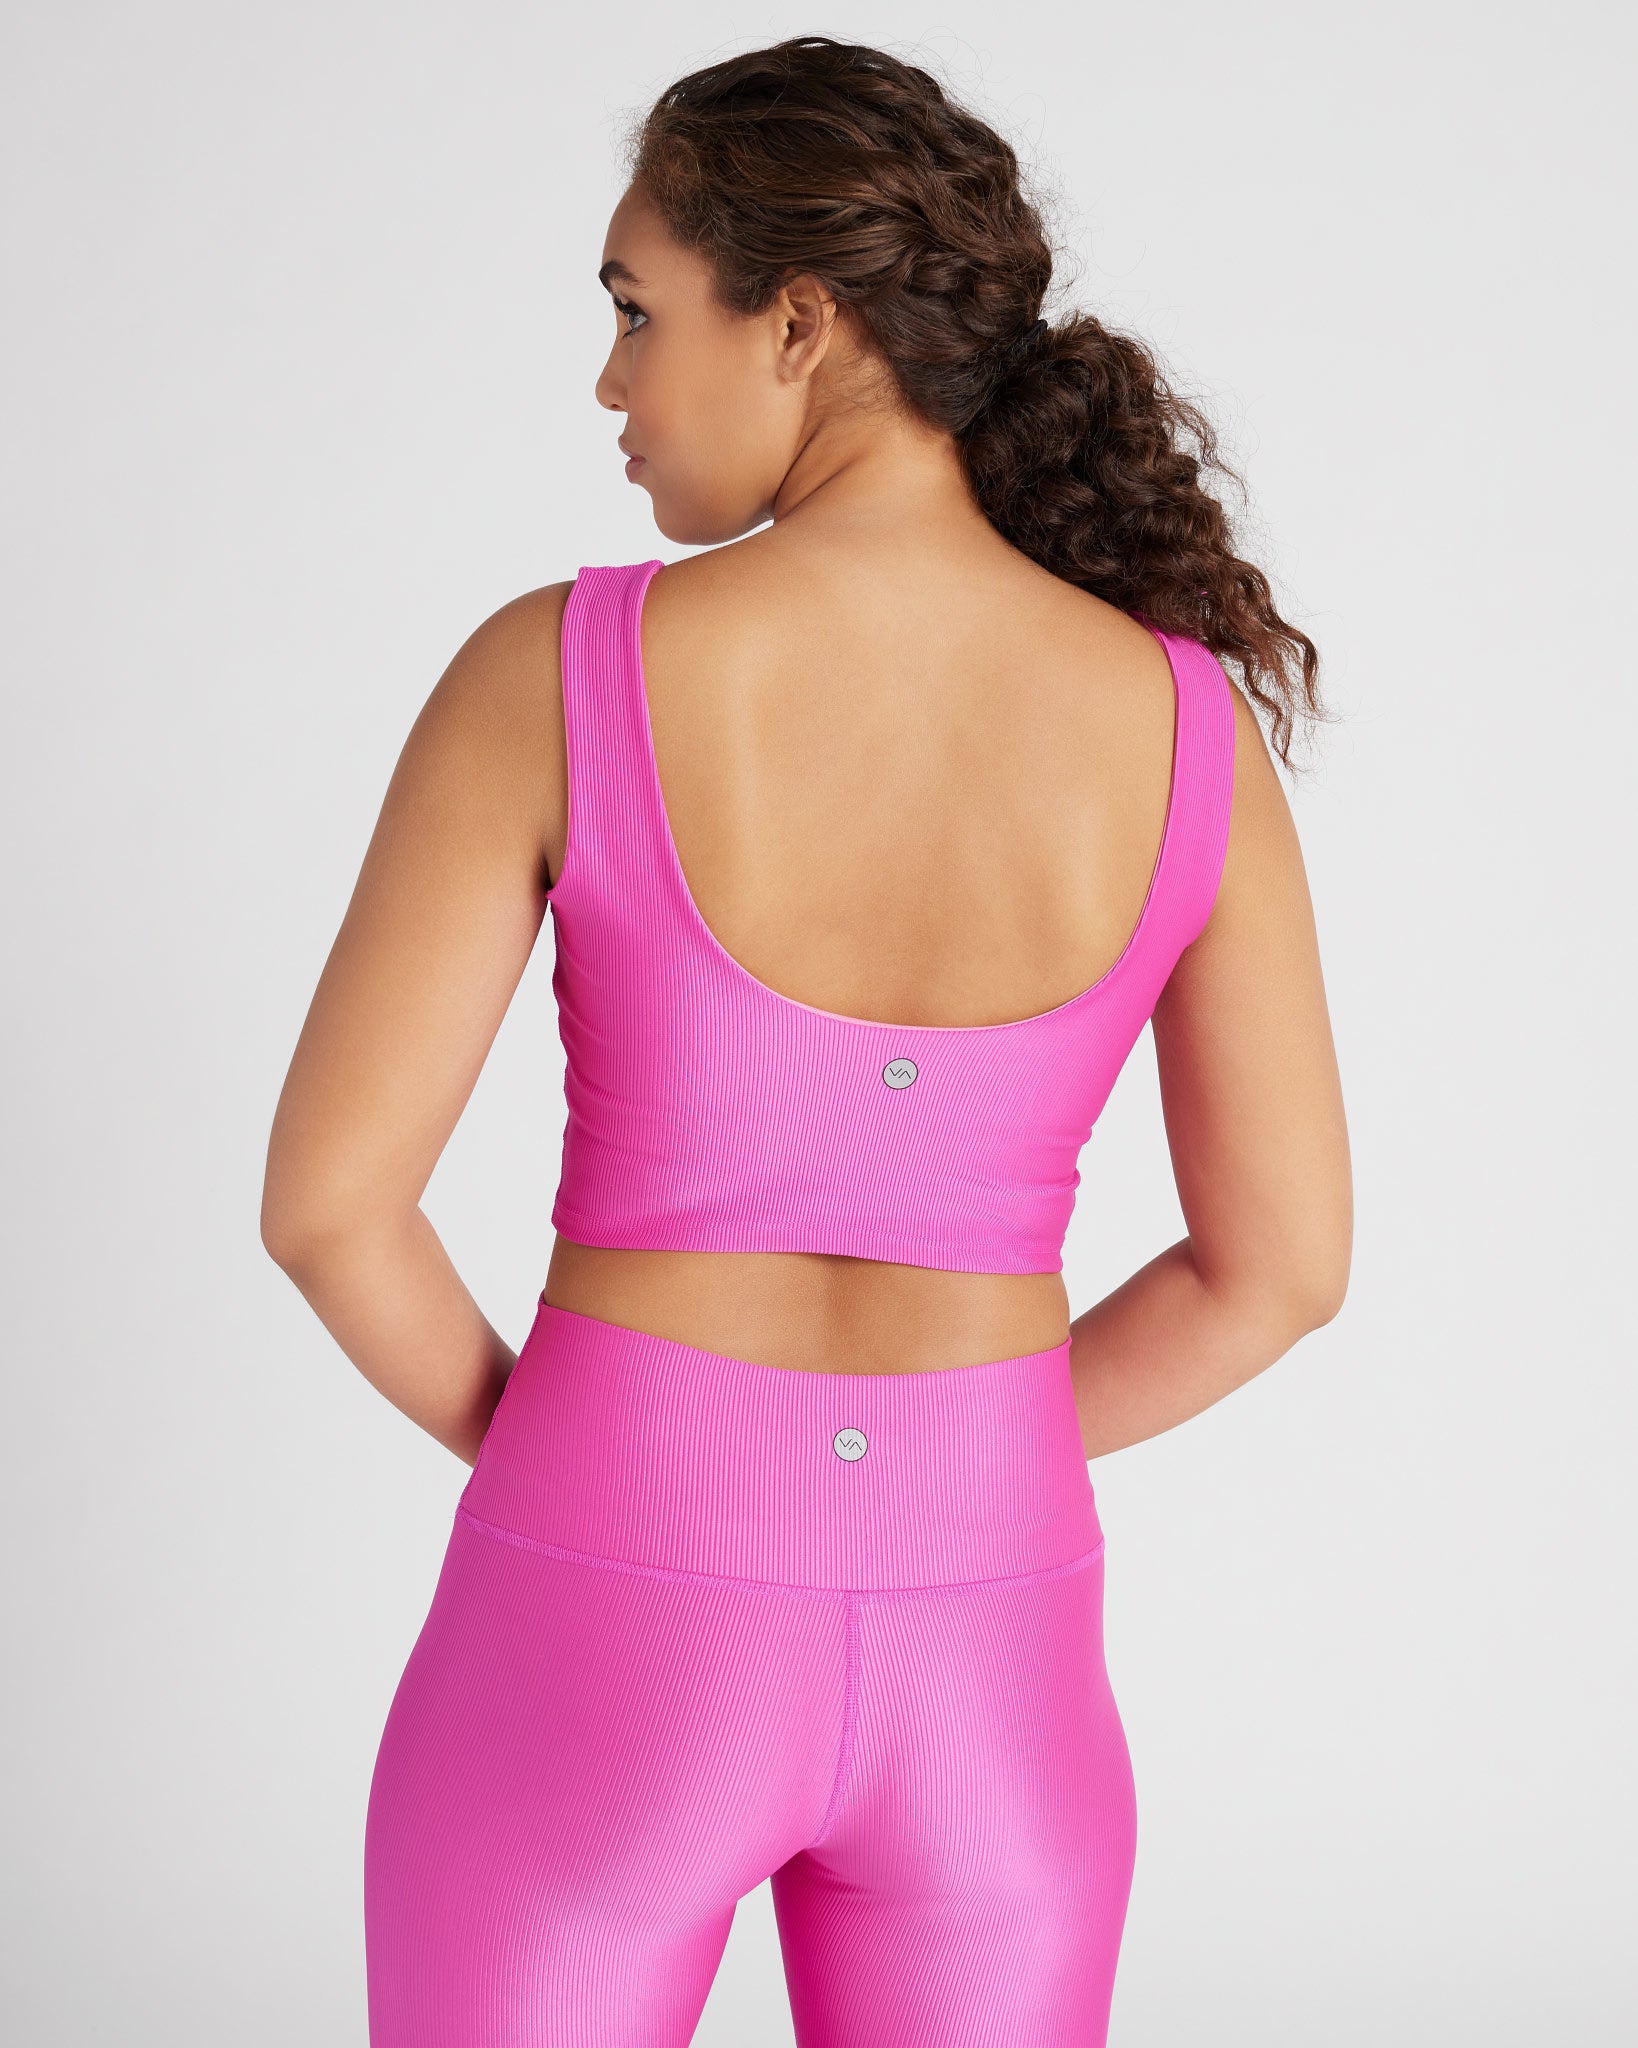 Buy DISOLVE Girl Padded Sports Bras for Women, Push Up Wireless Yoga Bra  Racerback Workout Avtivewear Bra Tops Size (28 Till 34) Blue at